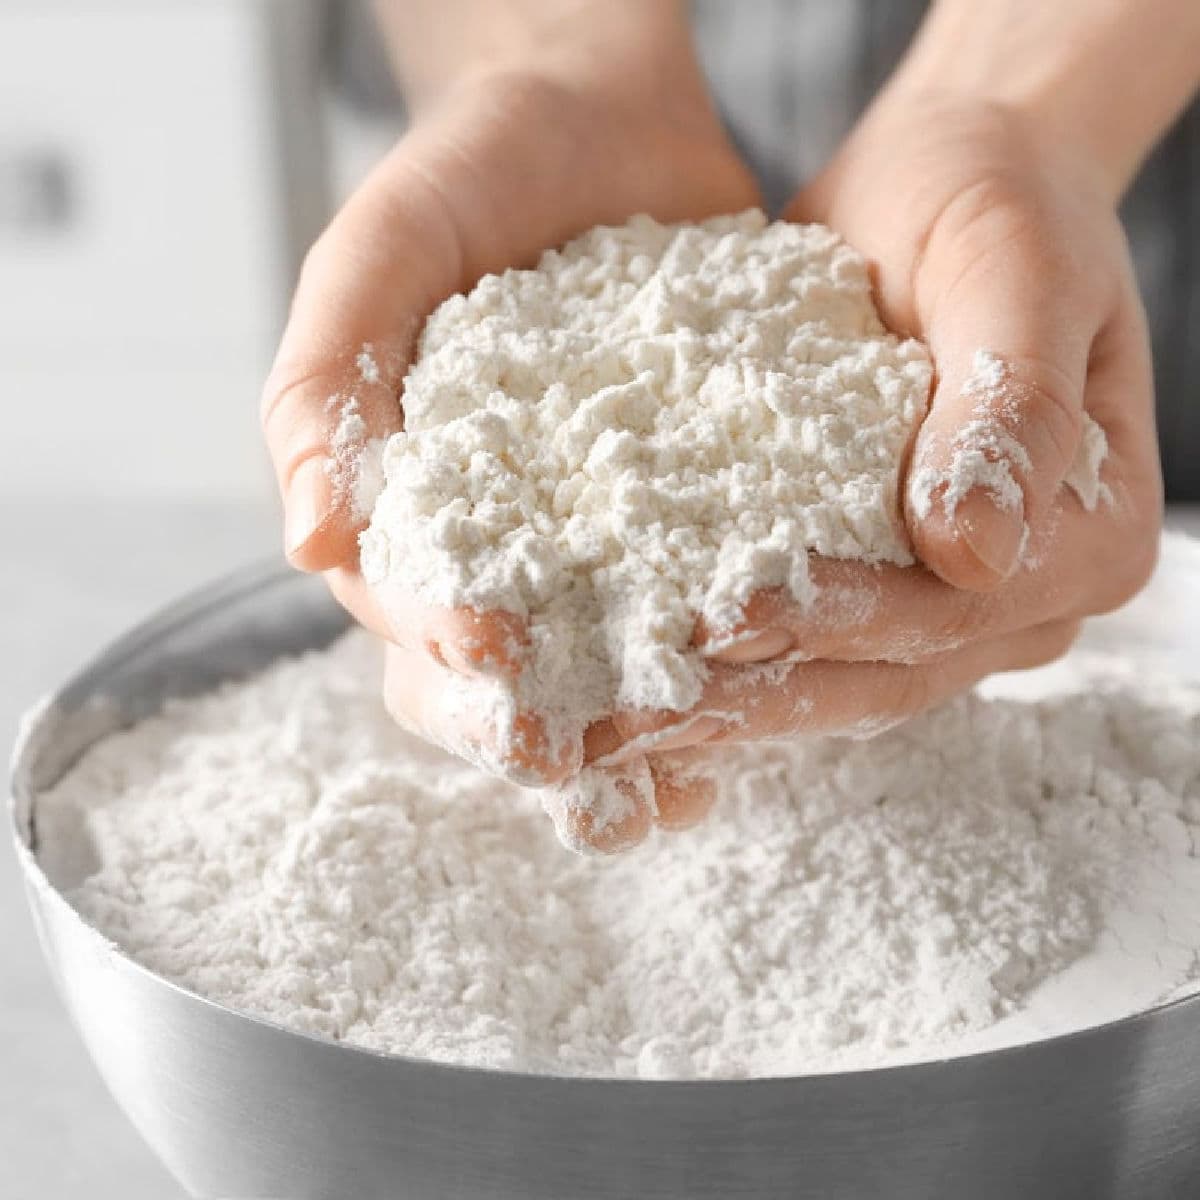 Can a bag of flour explode